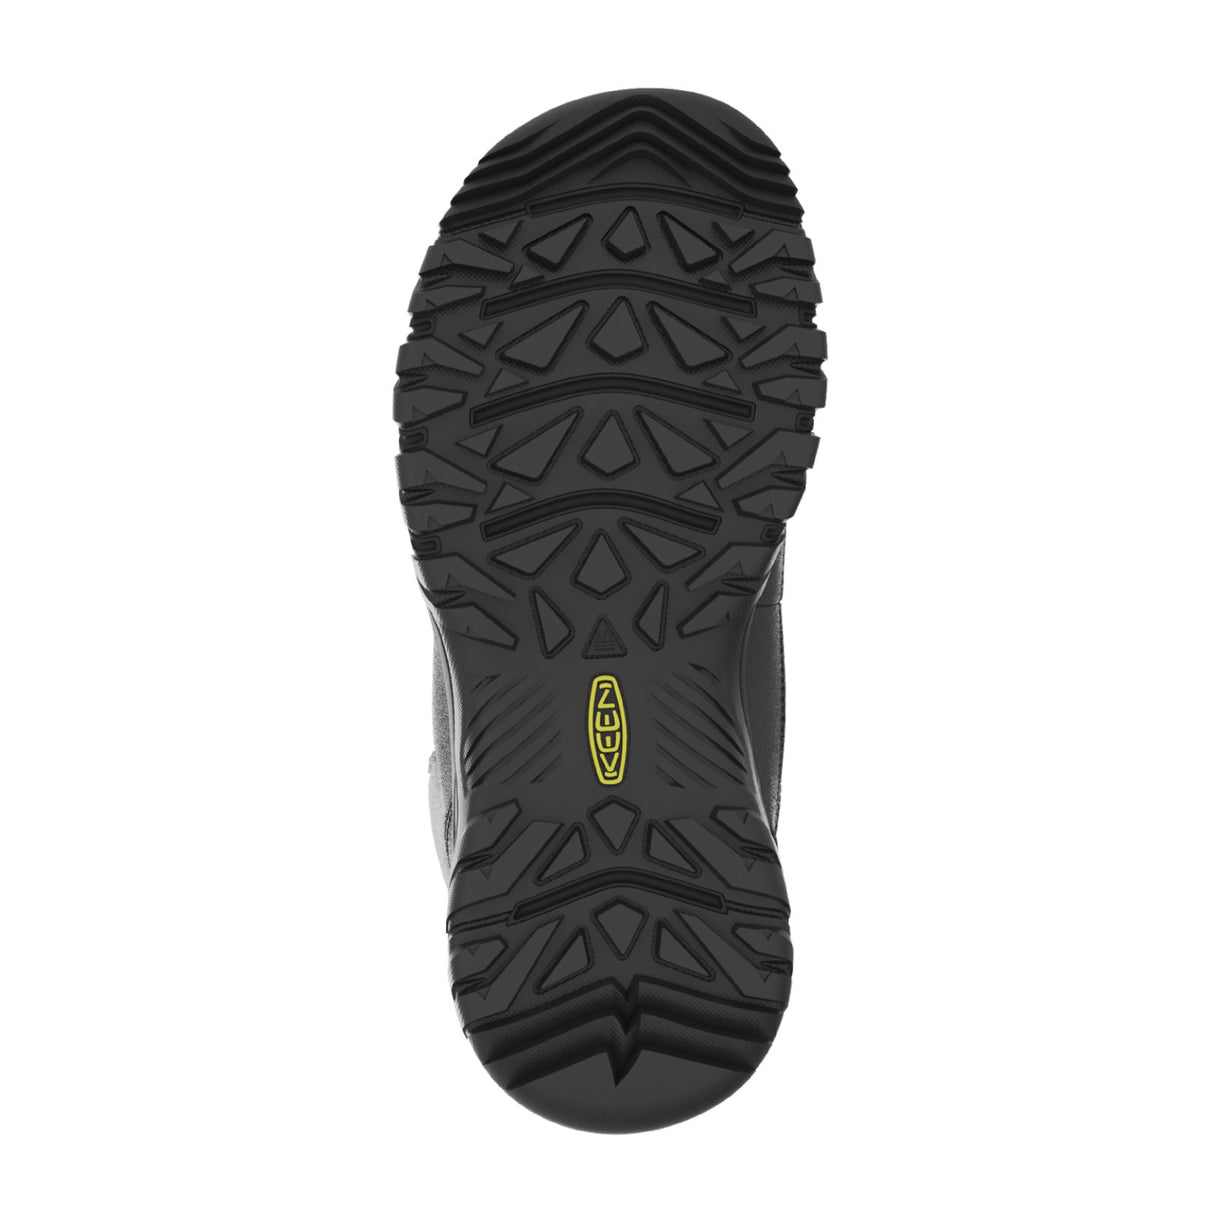 Keen Greta Tall Waterproof Boot (Women) - Black/Black Plaid Boots - Winter - High Boot - The Heel Shoe Fitters